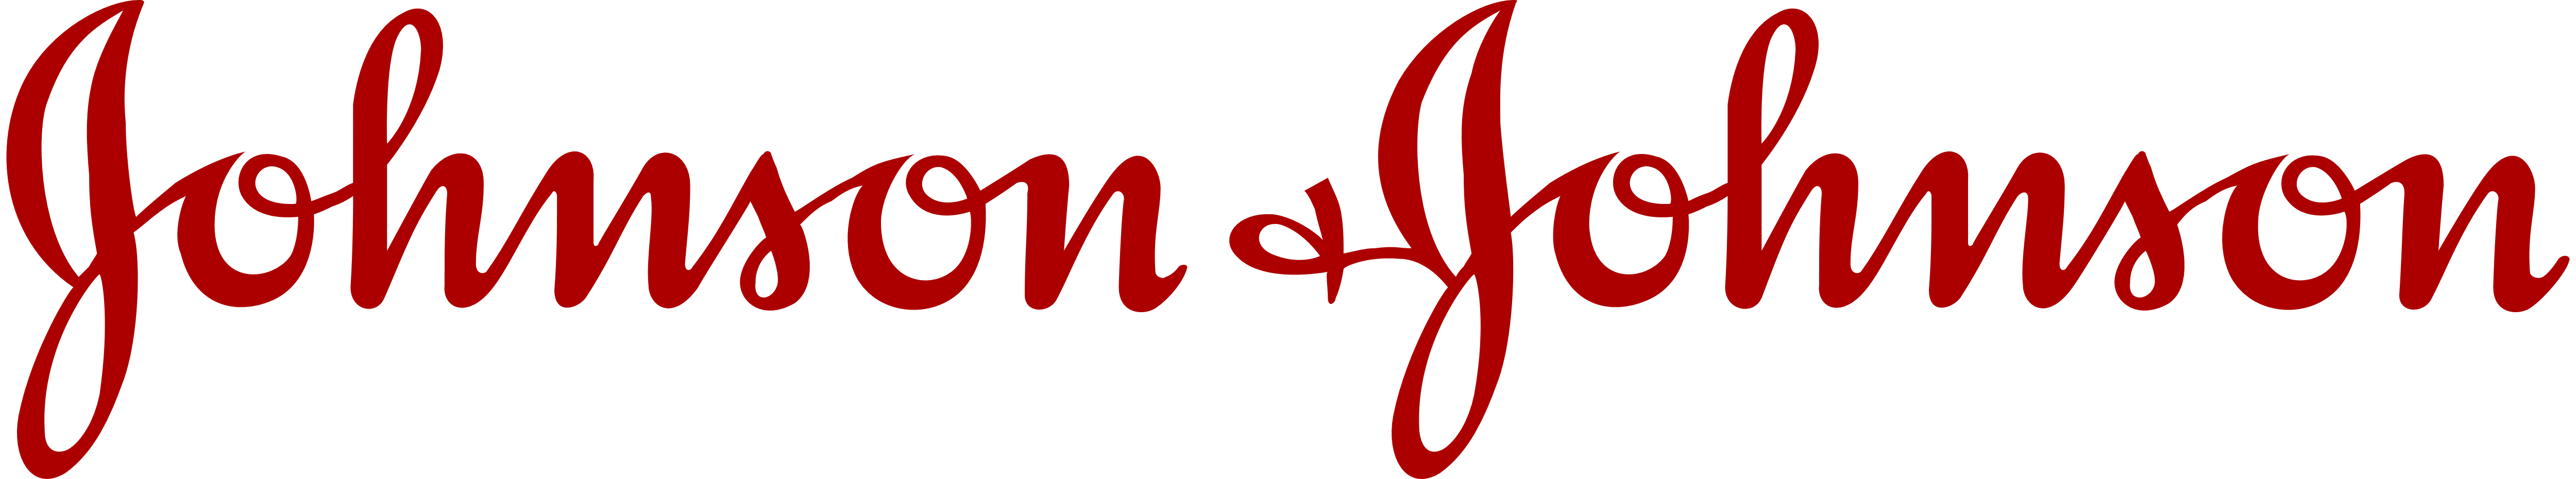 Johnson Johnson script logo